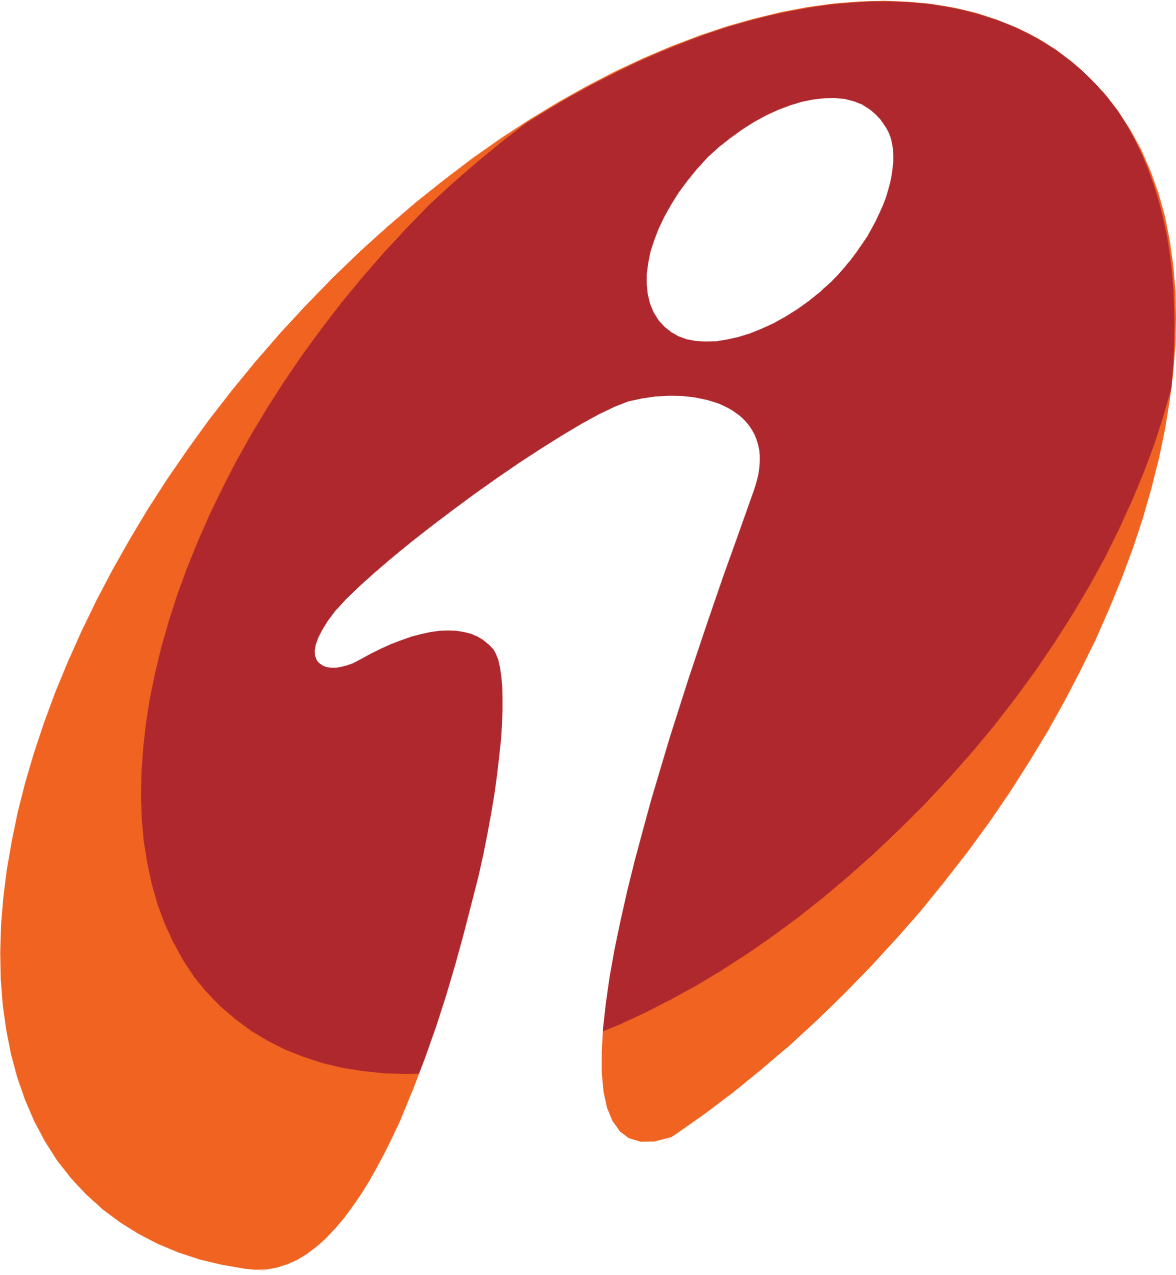 icici general insurance logo